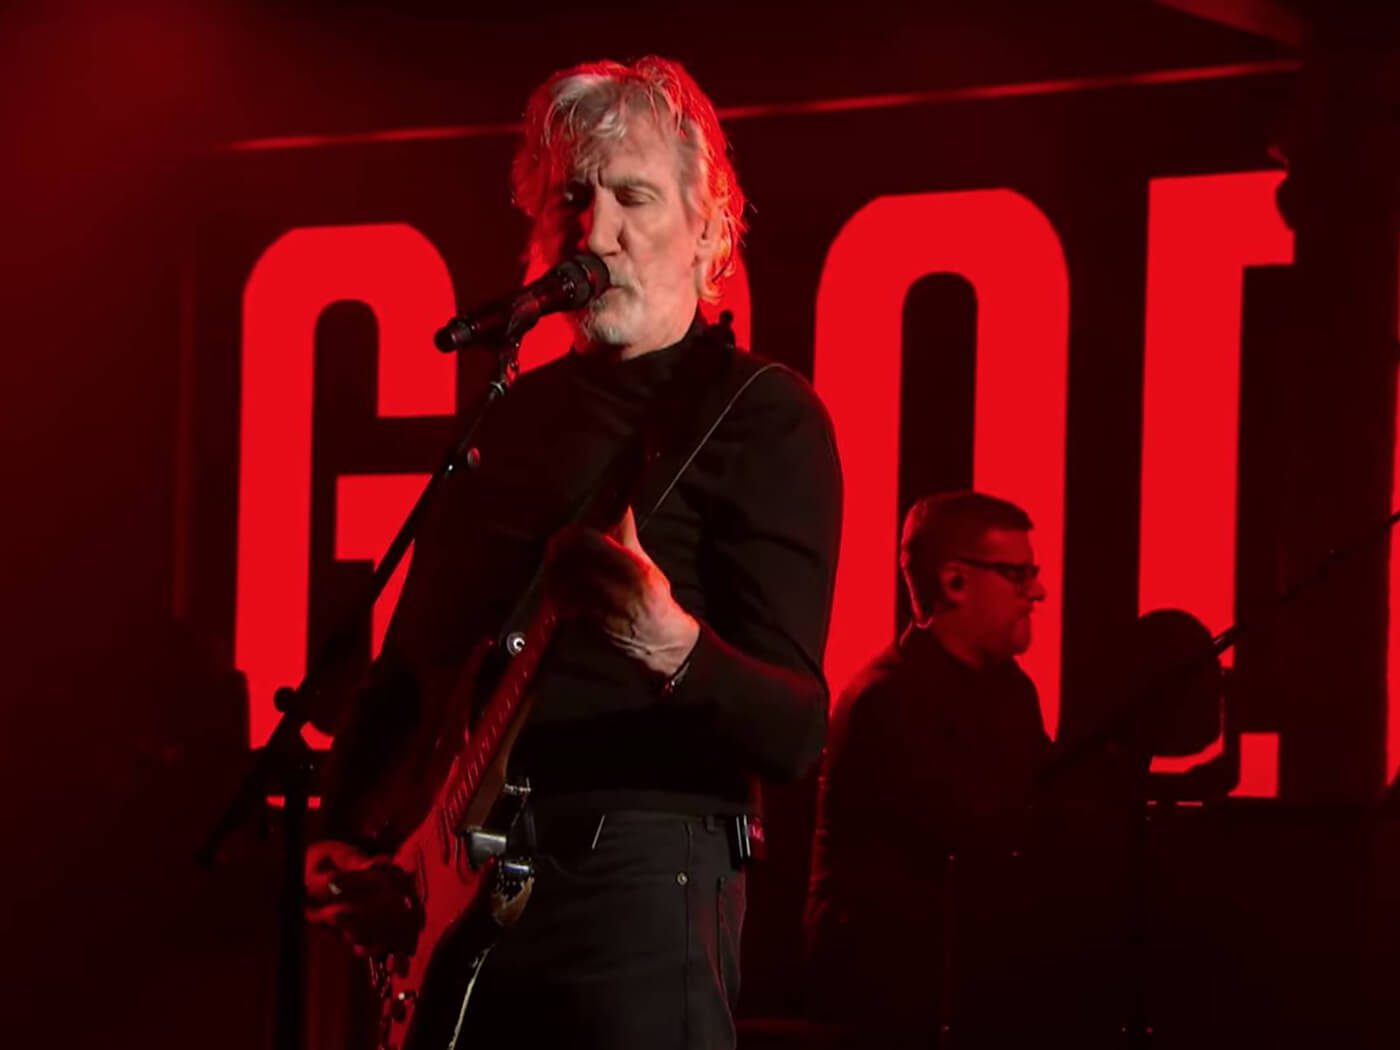 Watch Roger Waters play a medley of Pink Floyd songs on Colbert